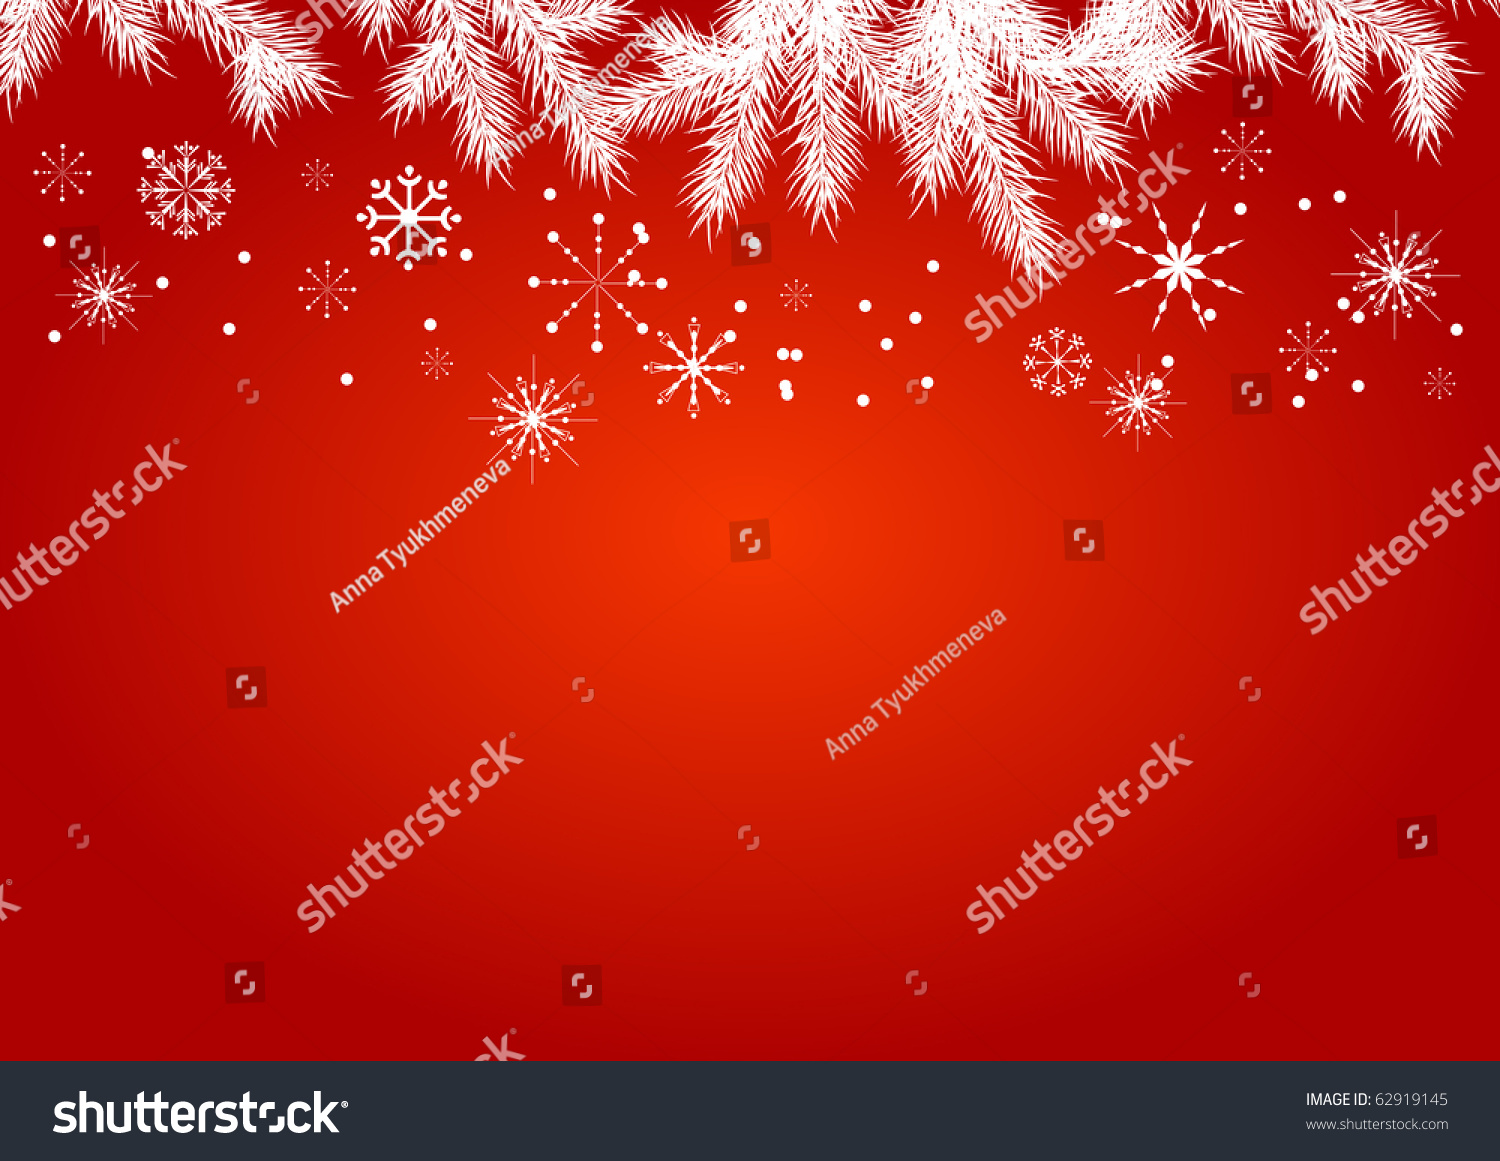 Red Christmas Background Stock Vector Illustration 62919145 : Shutterstock